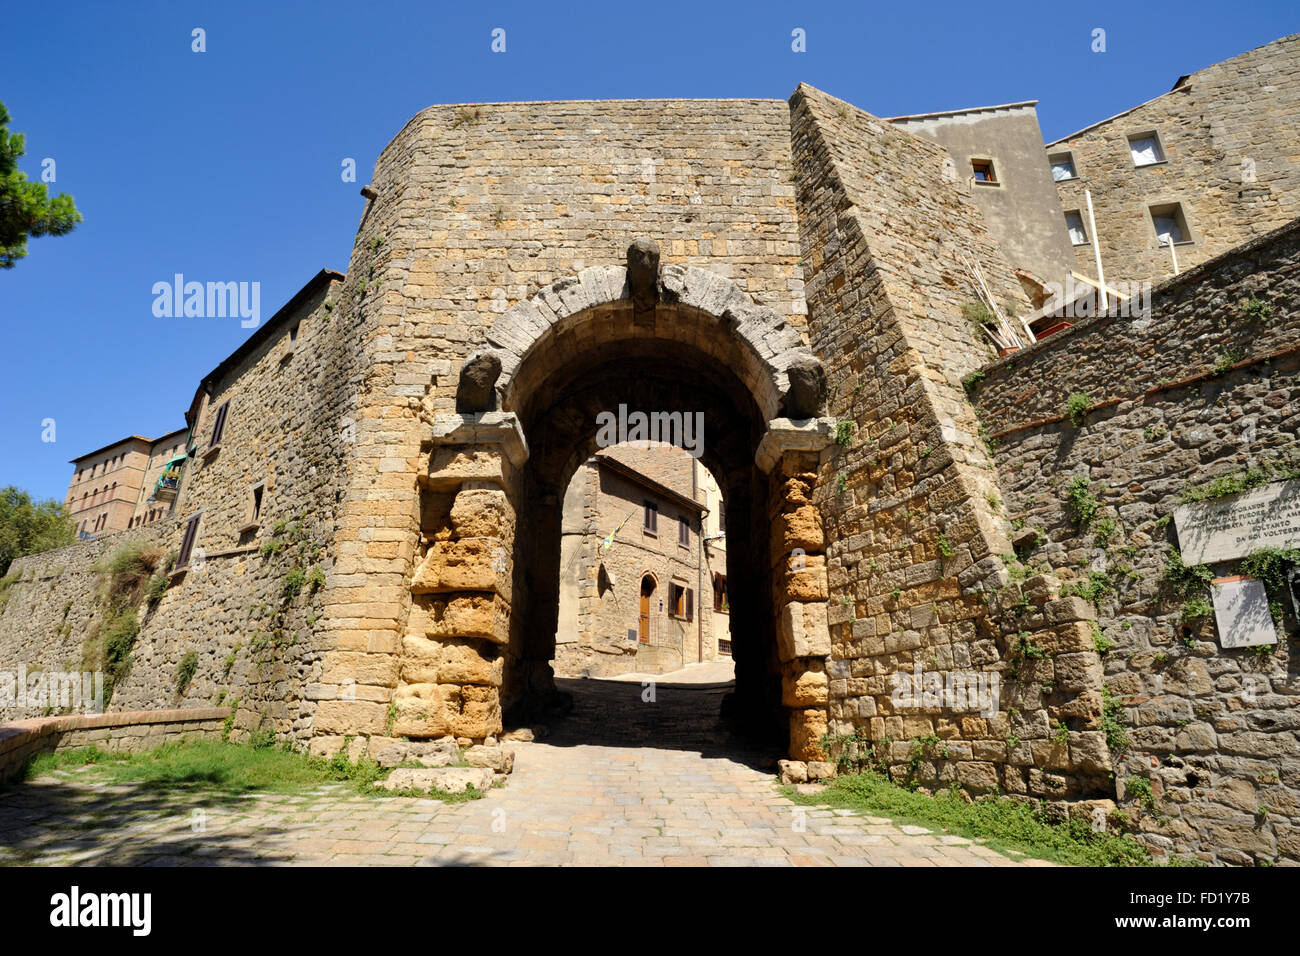 Porta all'arco, etruscan gate, Volterra, Tuscany, Italy Stock Photo